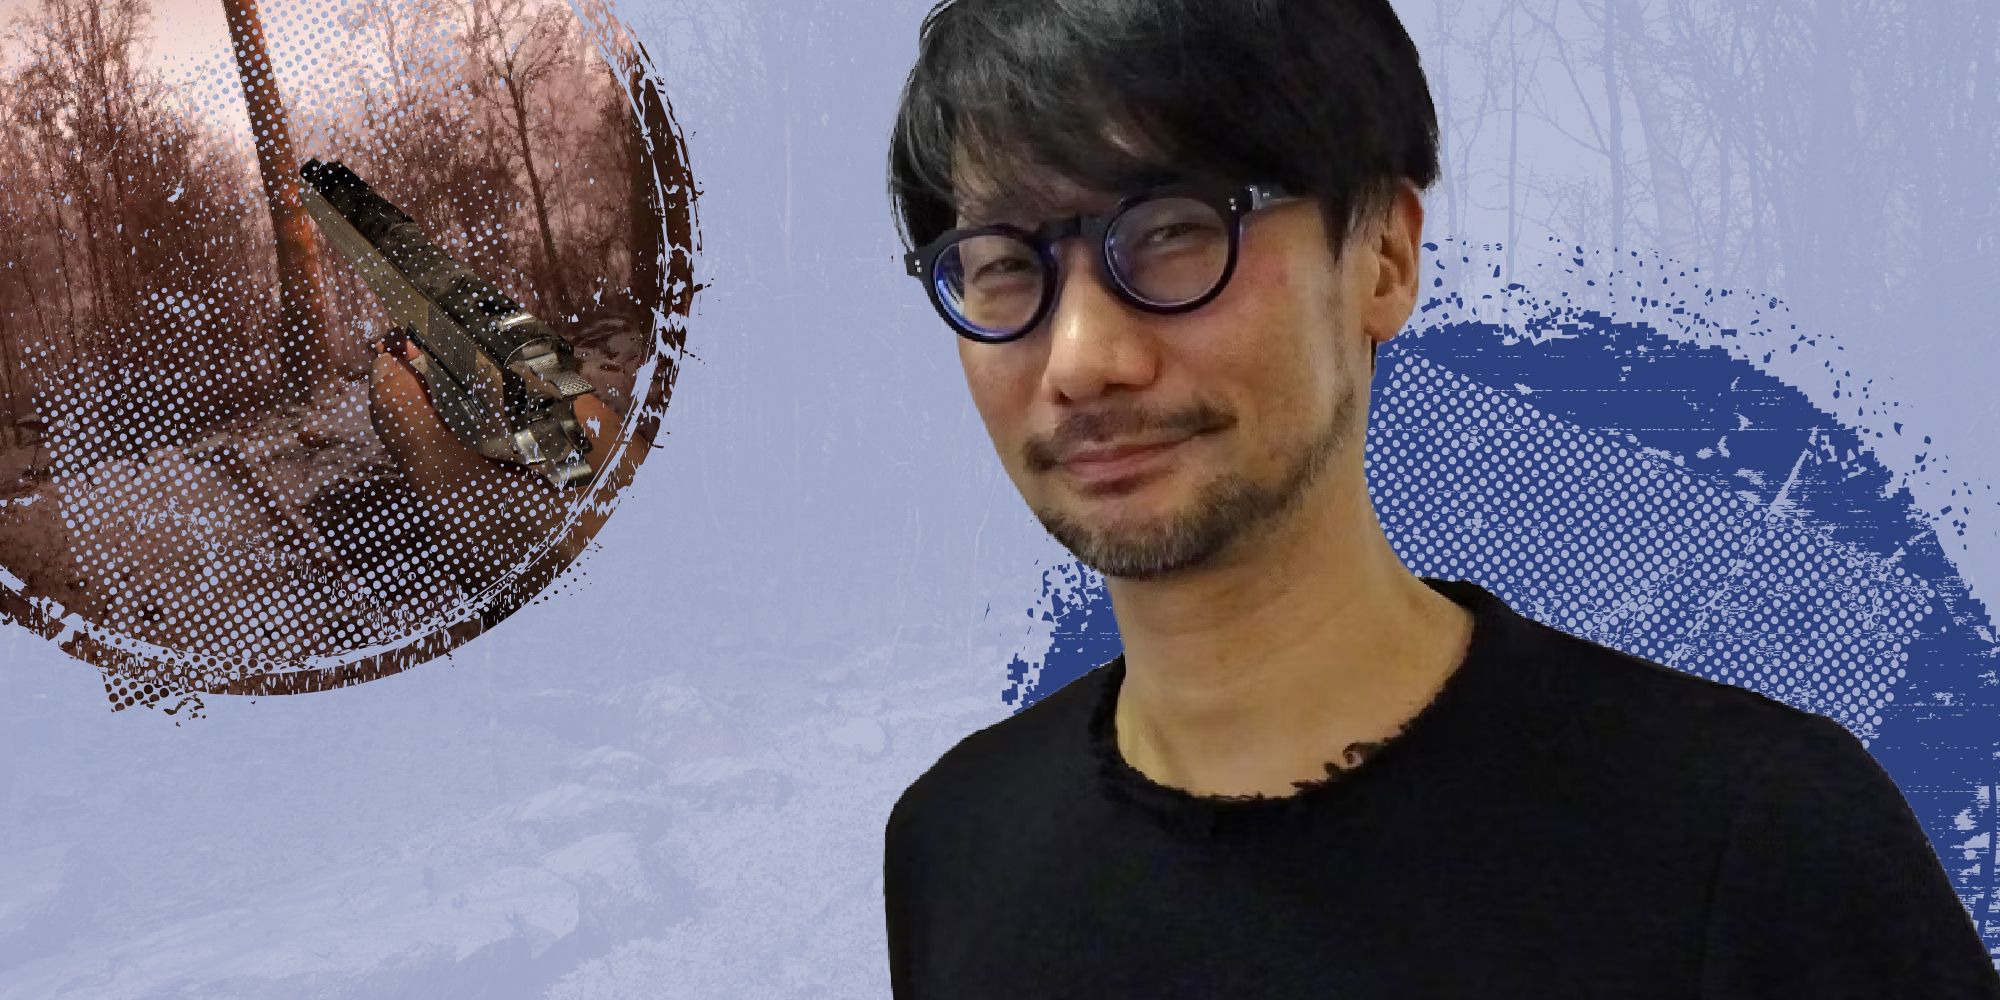 Hideo Kojima Presents Brain Structure: Spotify Podcast Premiere Date